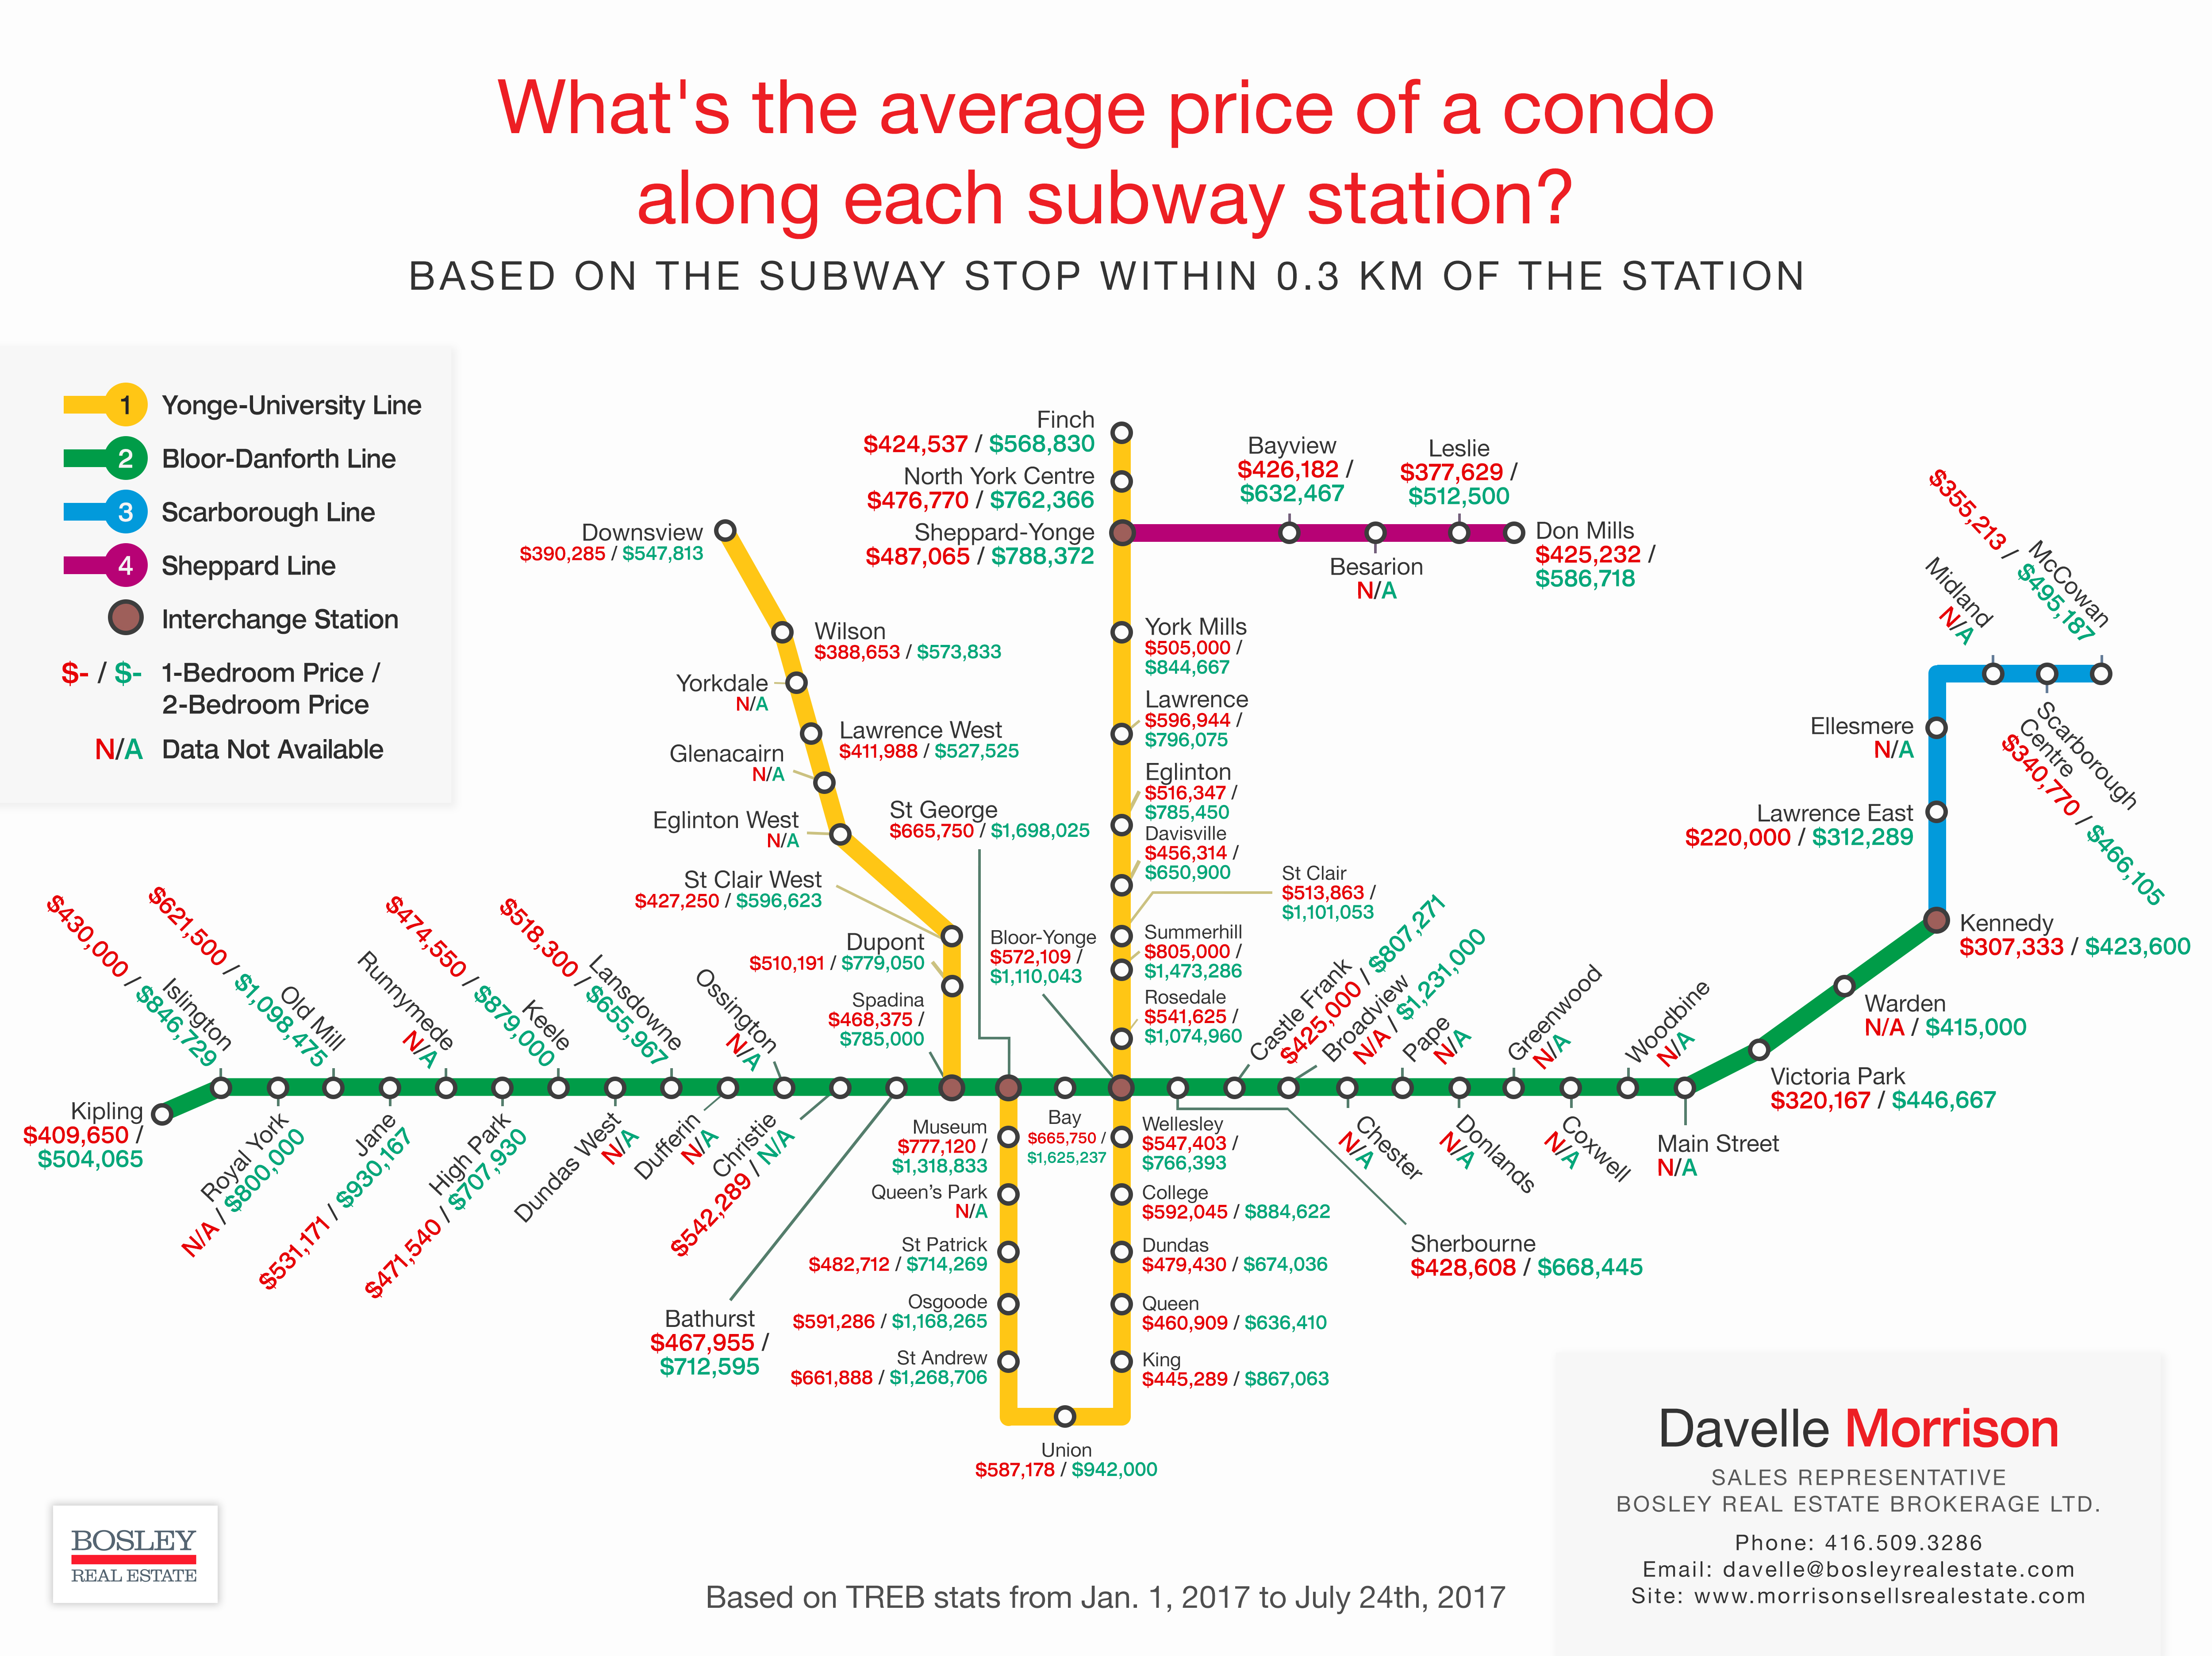 Condo prices near TTC stations in Toronto